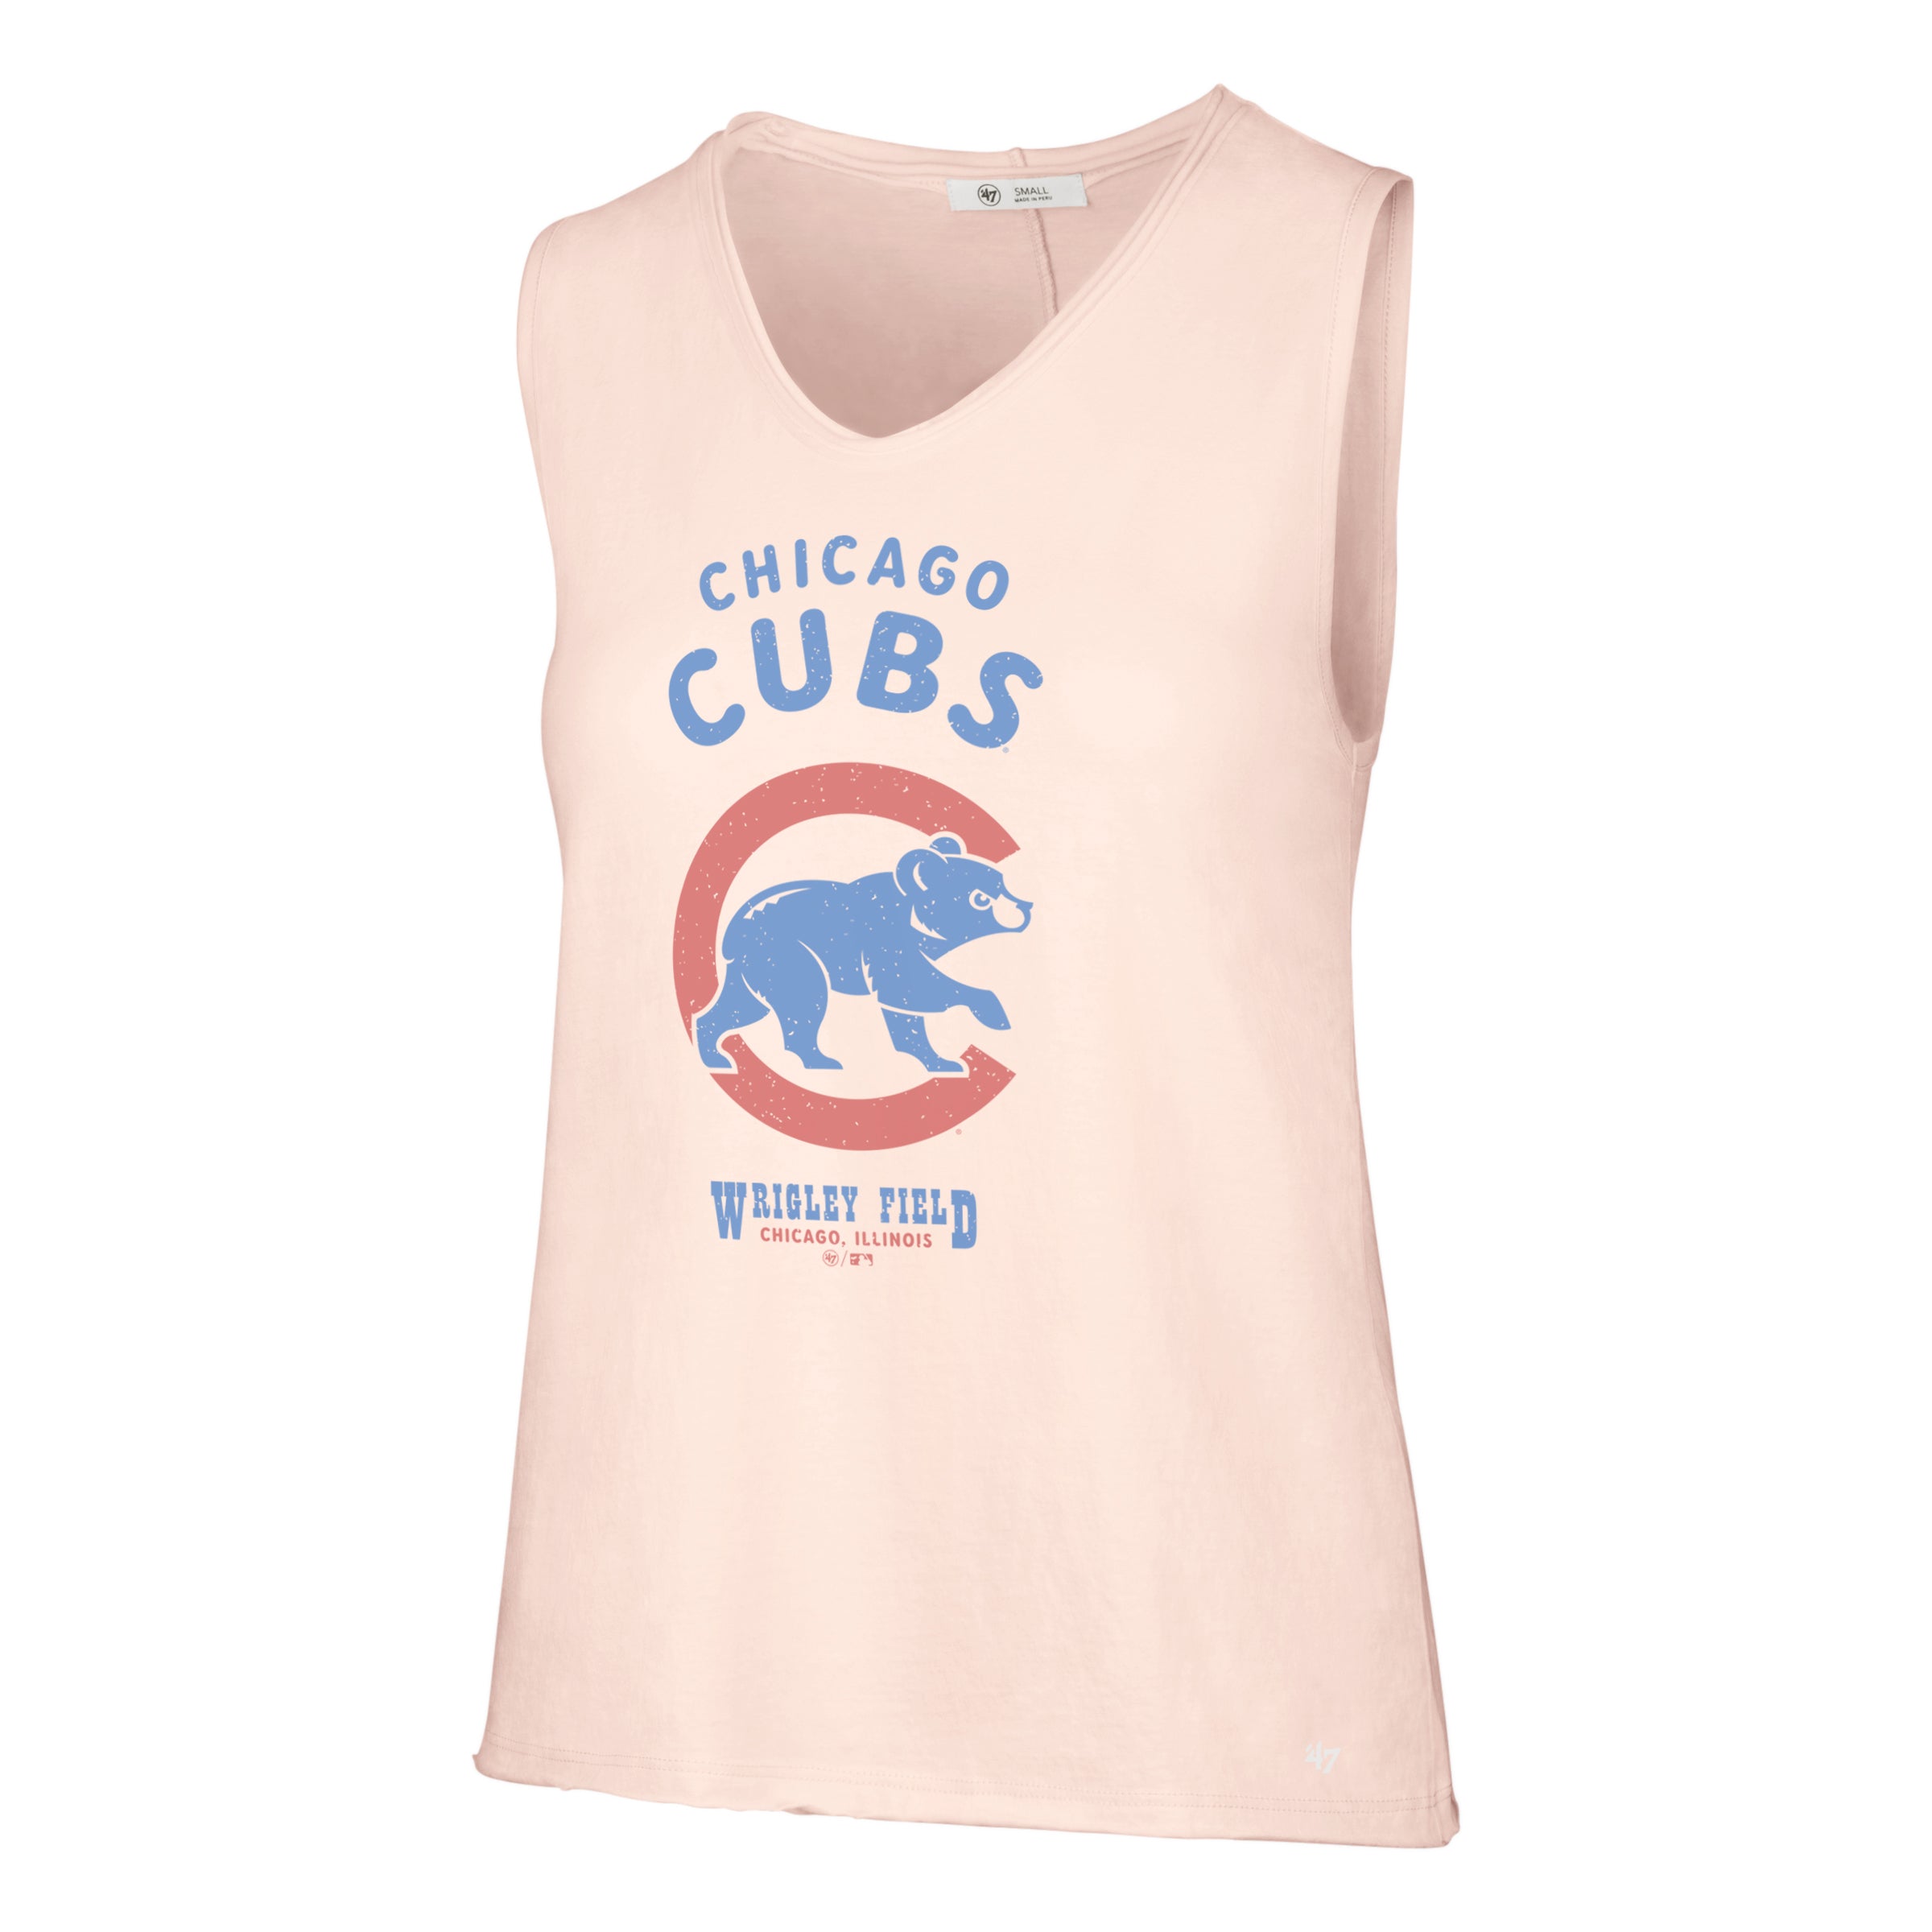 After9desi9ns My Heart Belongs to The Chicago Cubs Women's Shirt/Tank Top | Chicago Cubs Fan Love Tank Top/T-Shirt | Love Chicago Cubs Women's Shirt